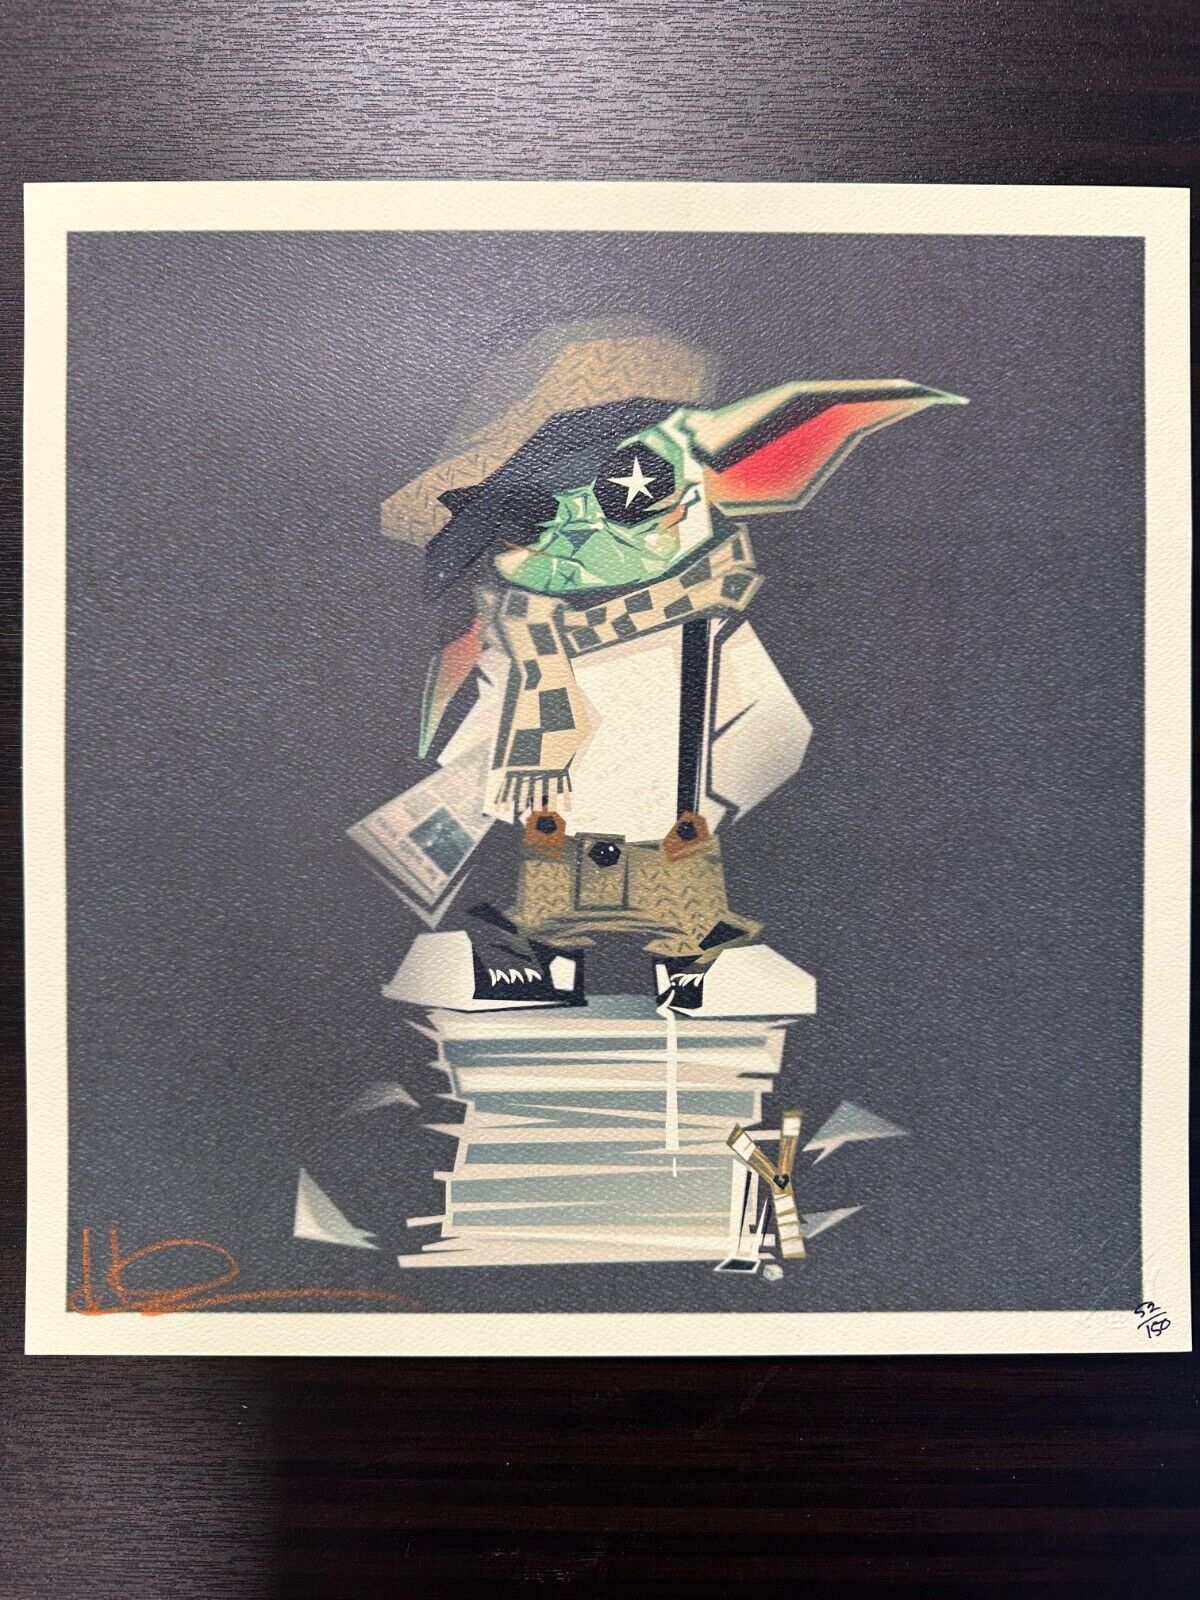 Nooligan Grogu (Baby Yoda) Art Print Limited Edition 52/150 SIGNED